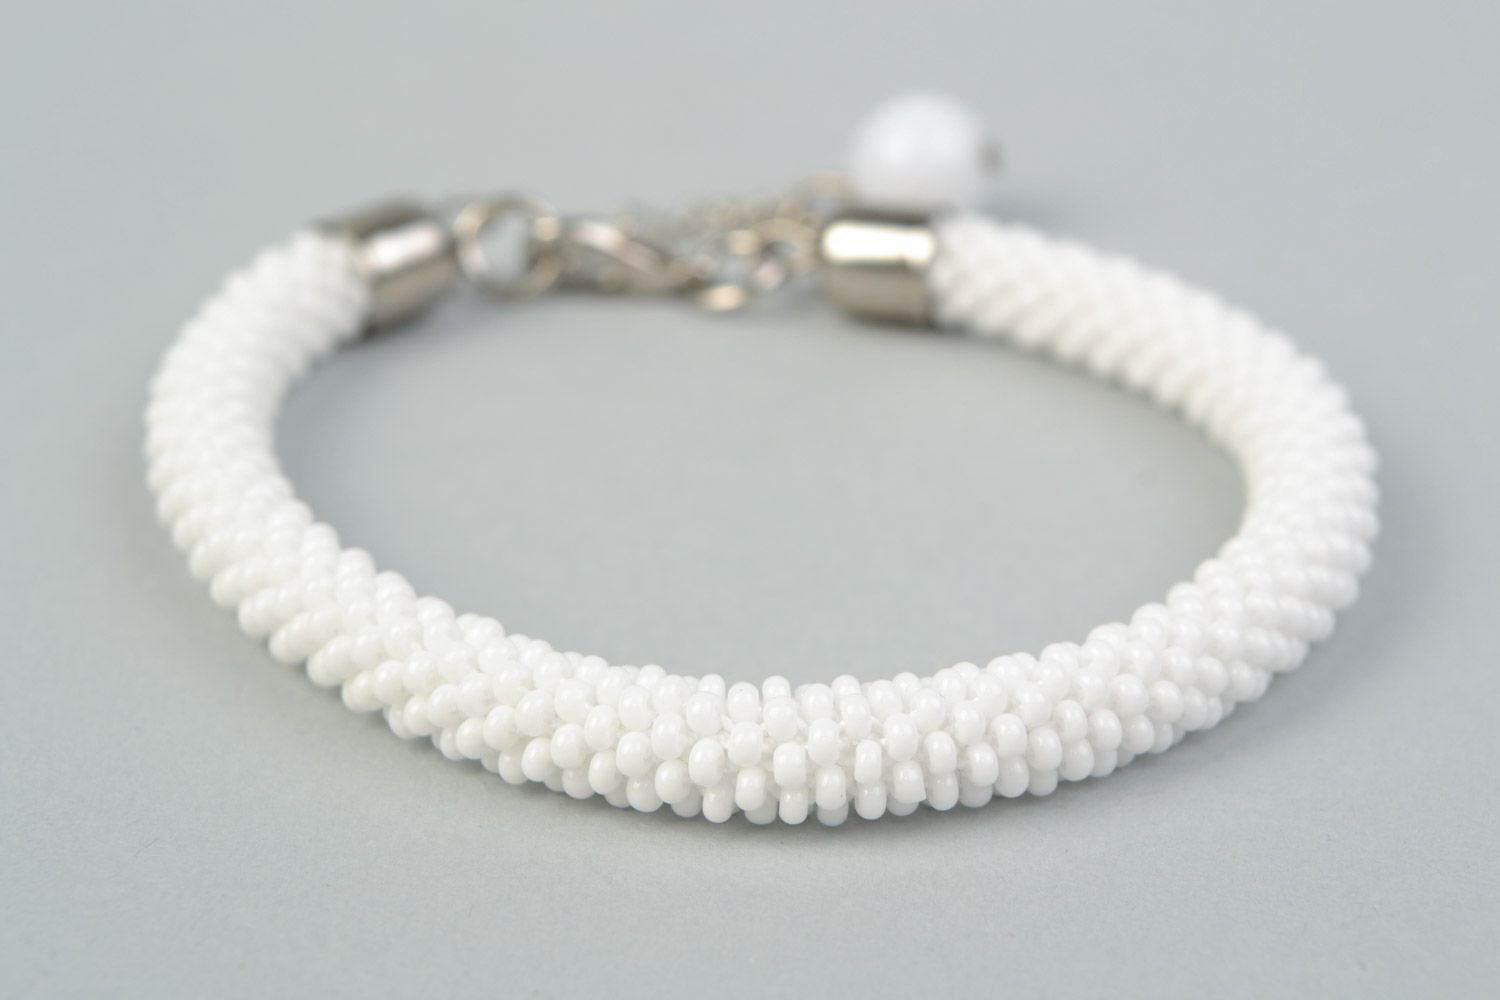 Handmade festive wrist cord bracelet crocheted of Czech beads in white color photo 3